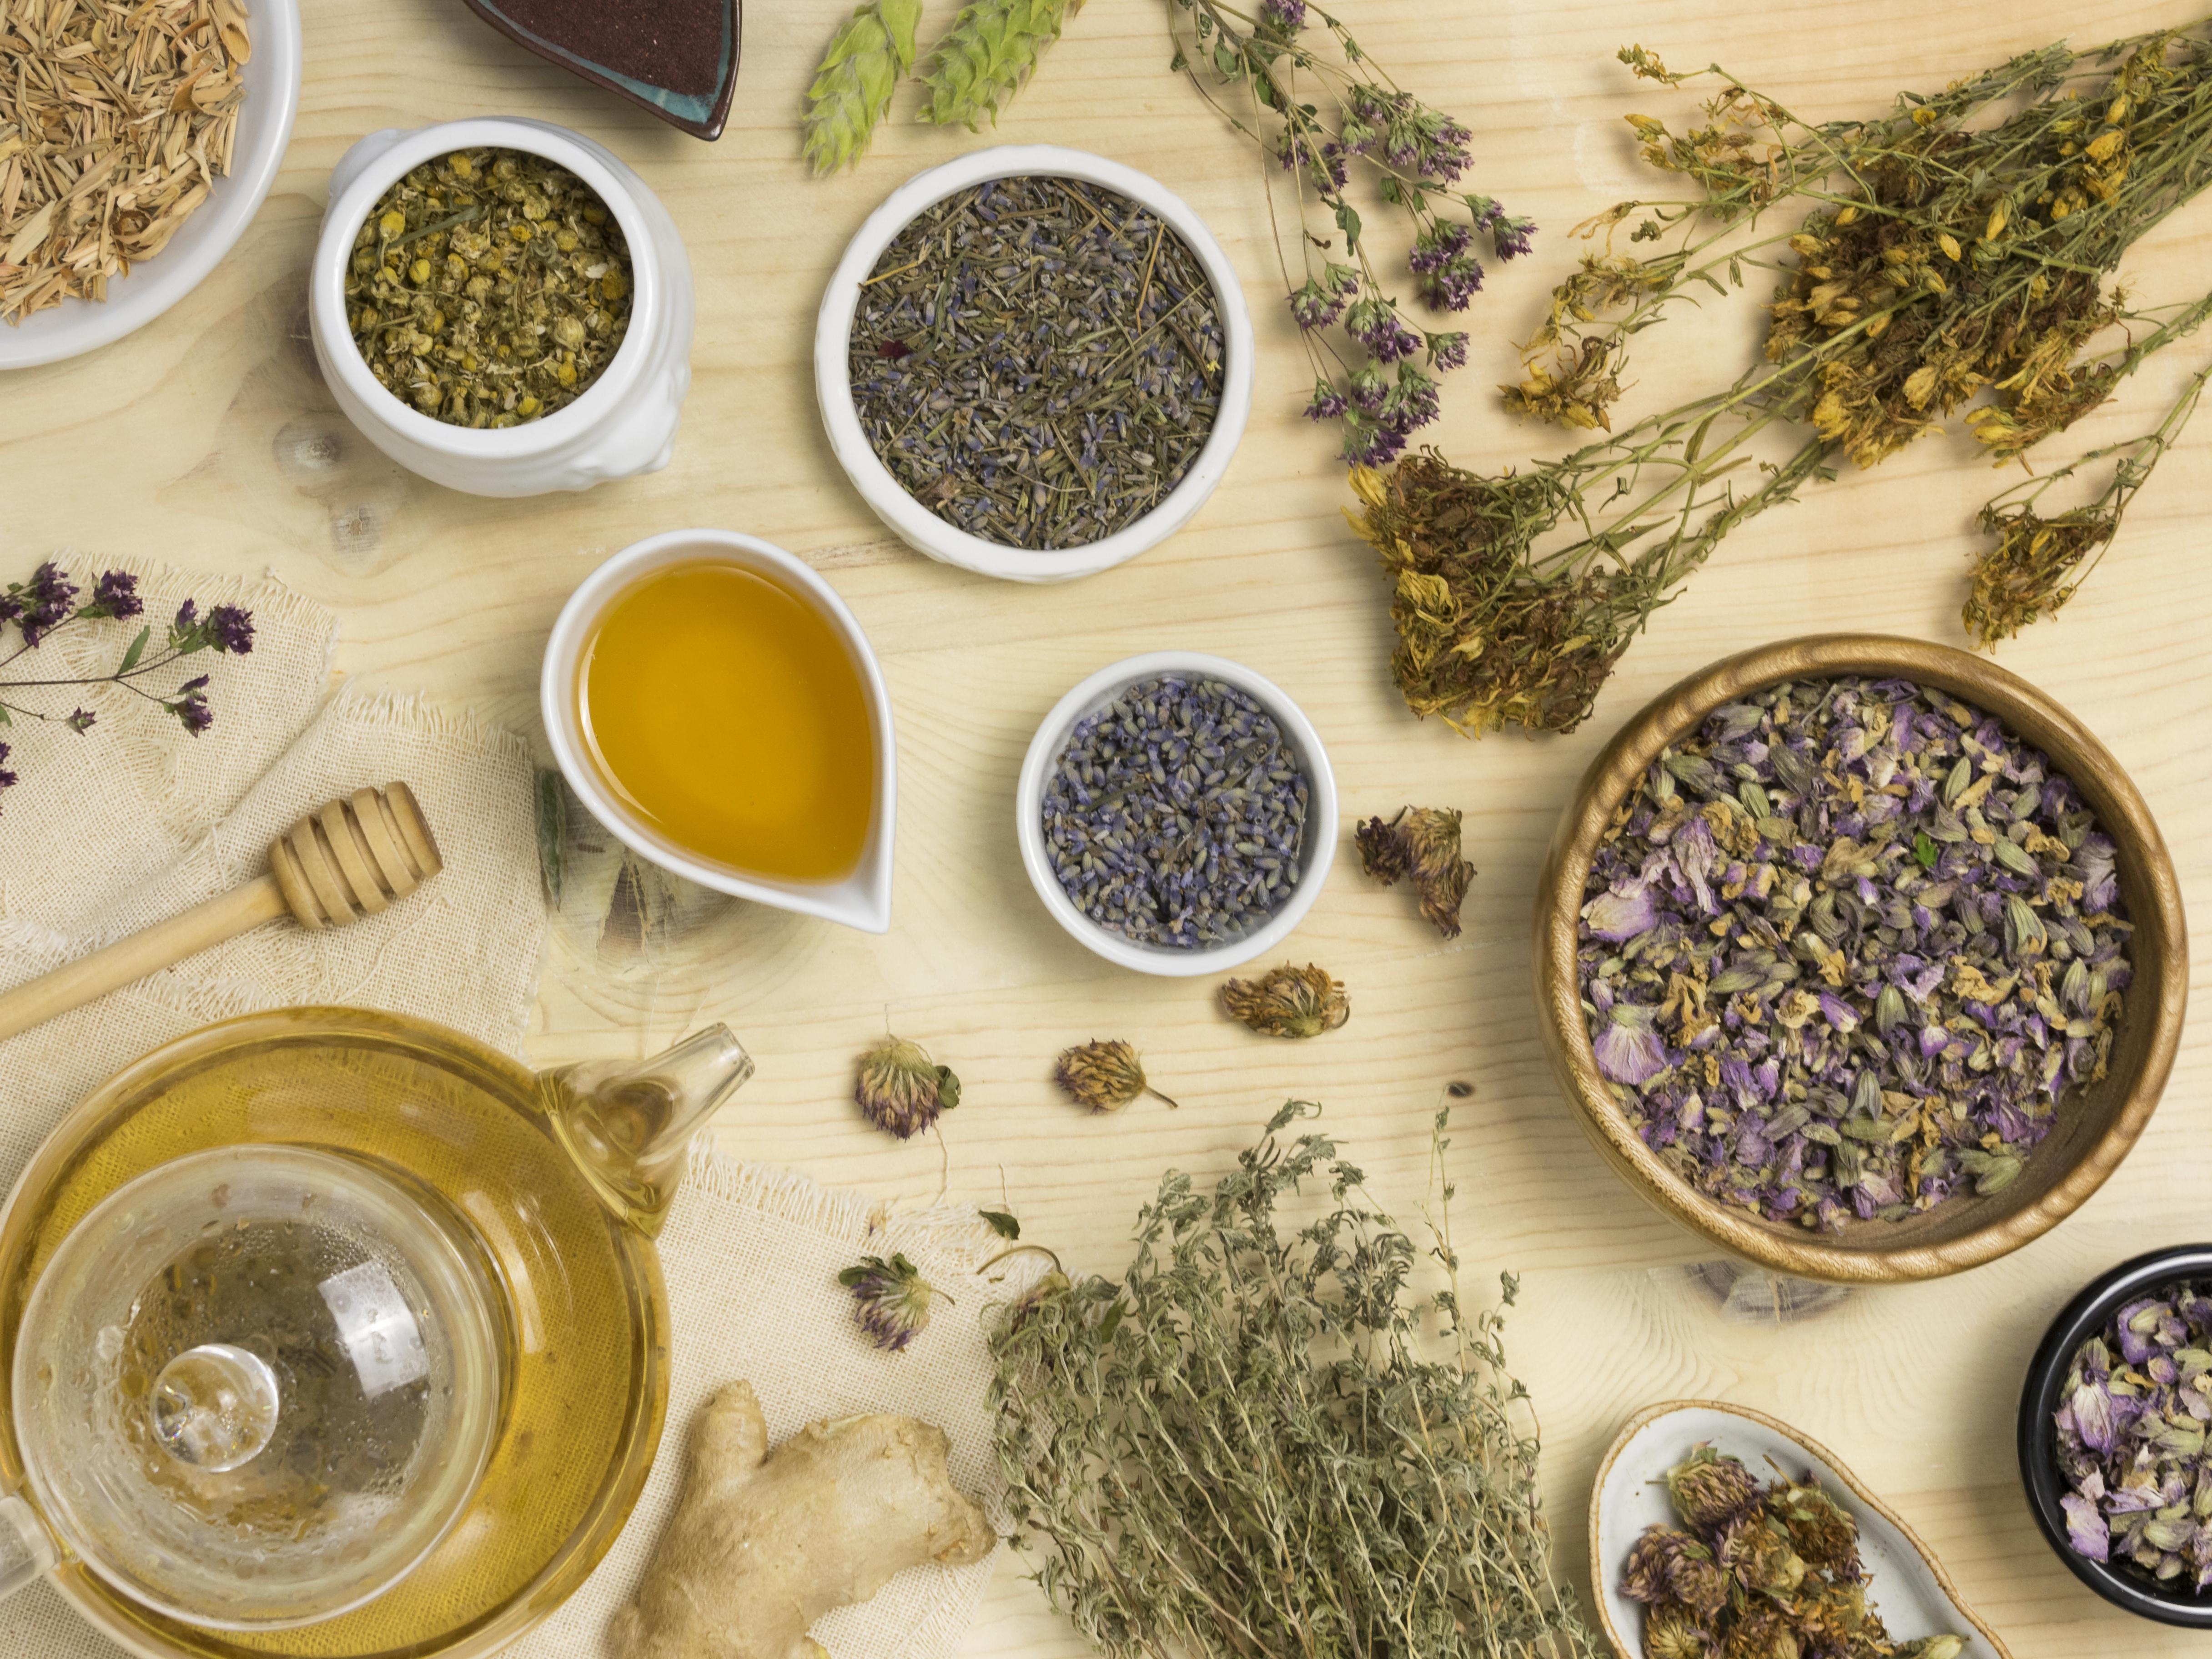 Herbs, dried plants and tea